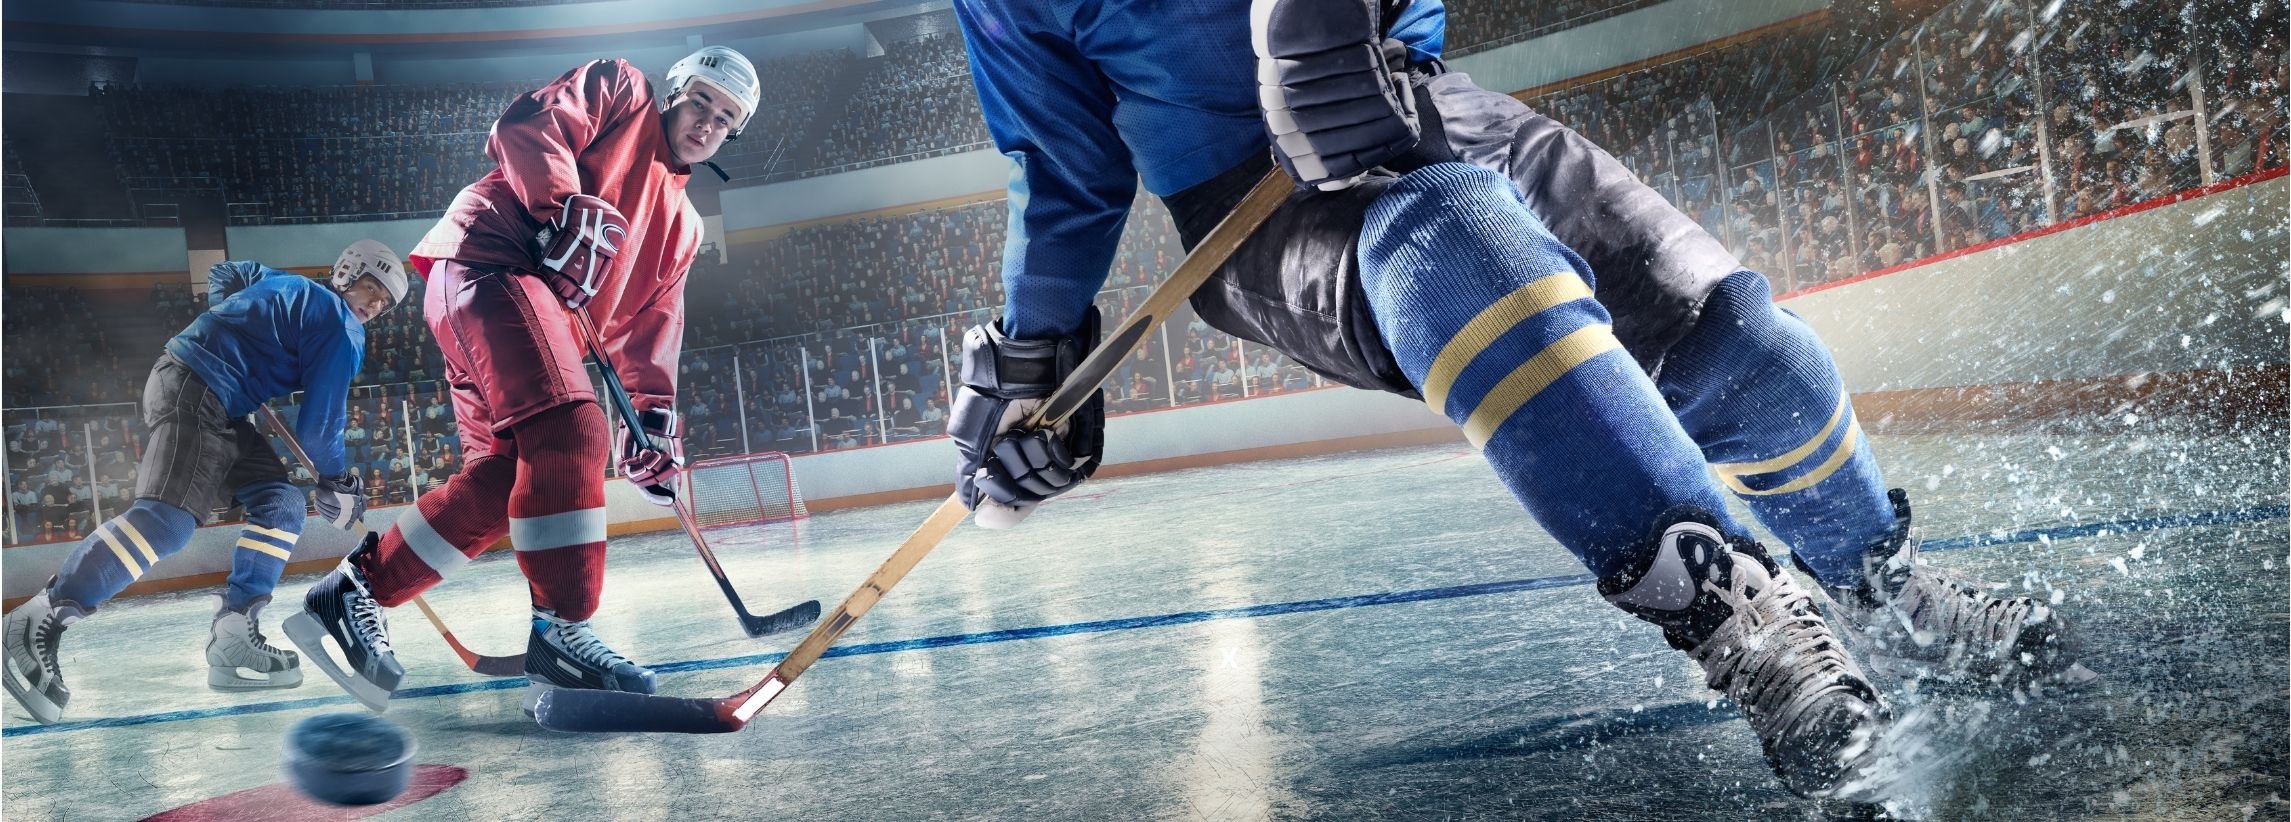 ice-hockey-fan-engagement